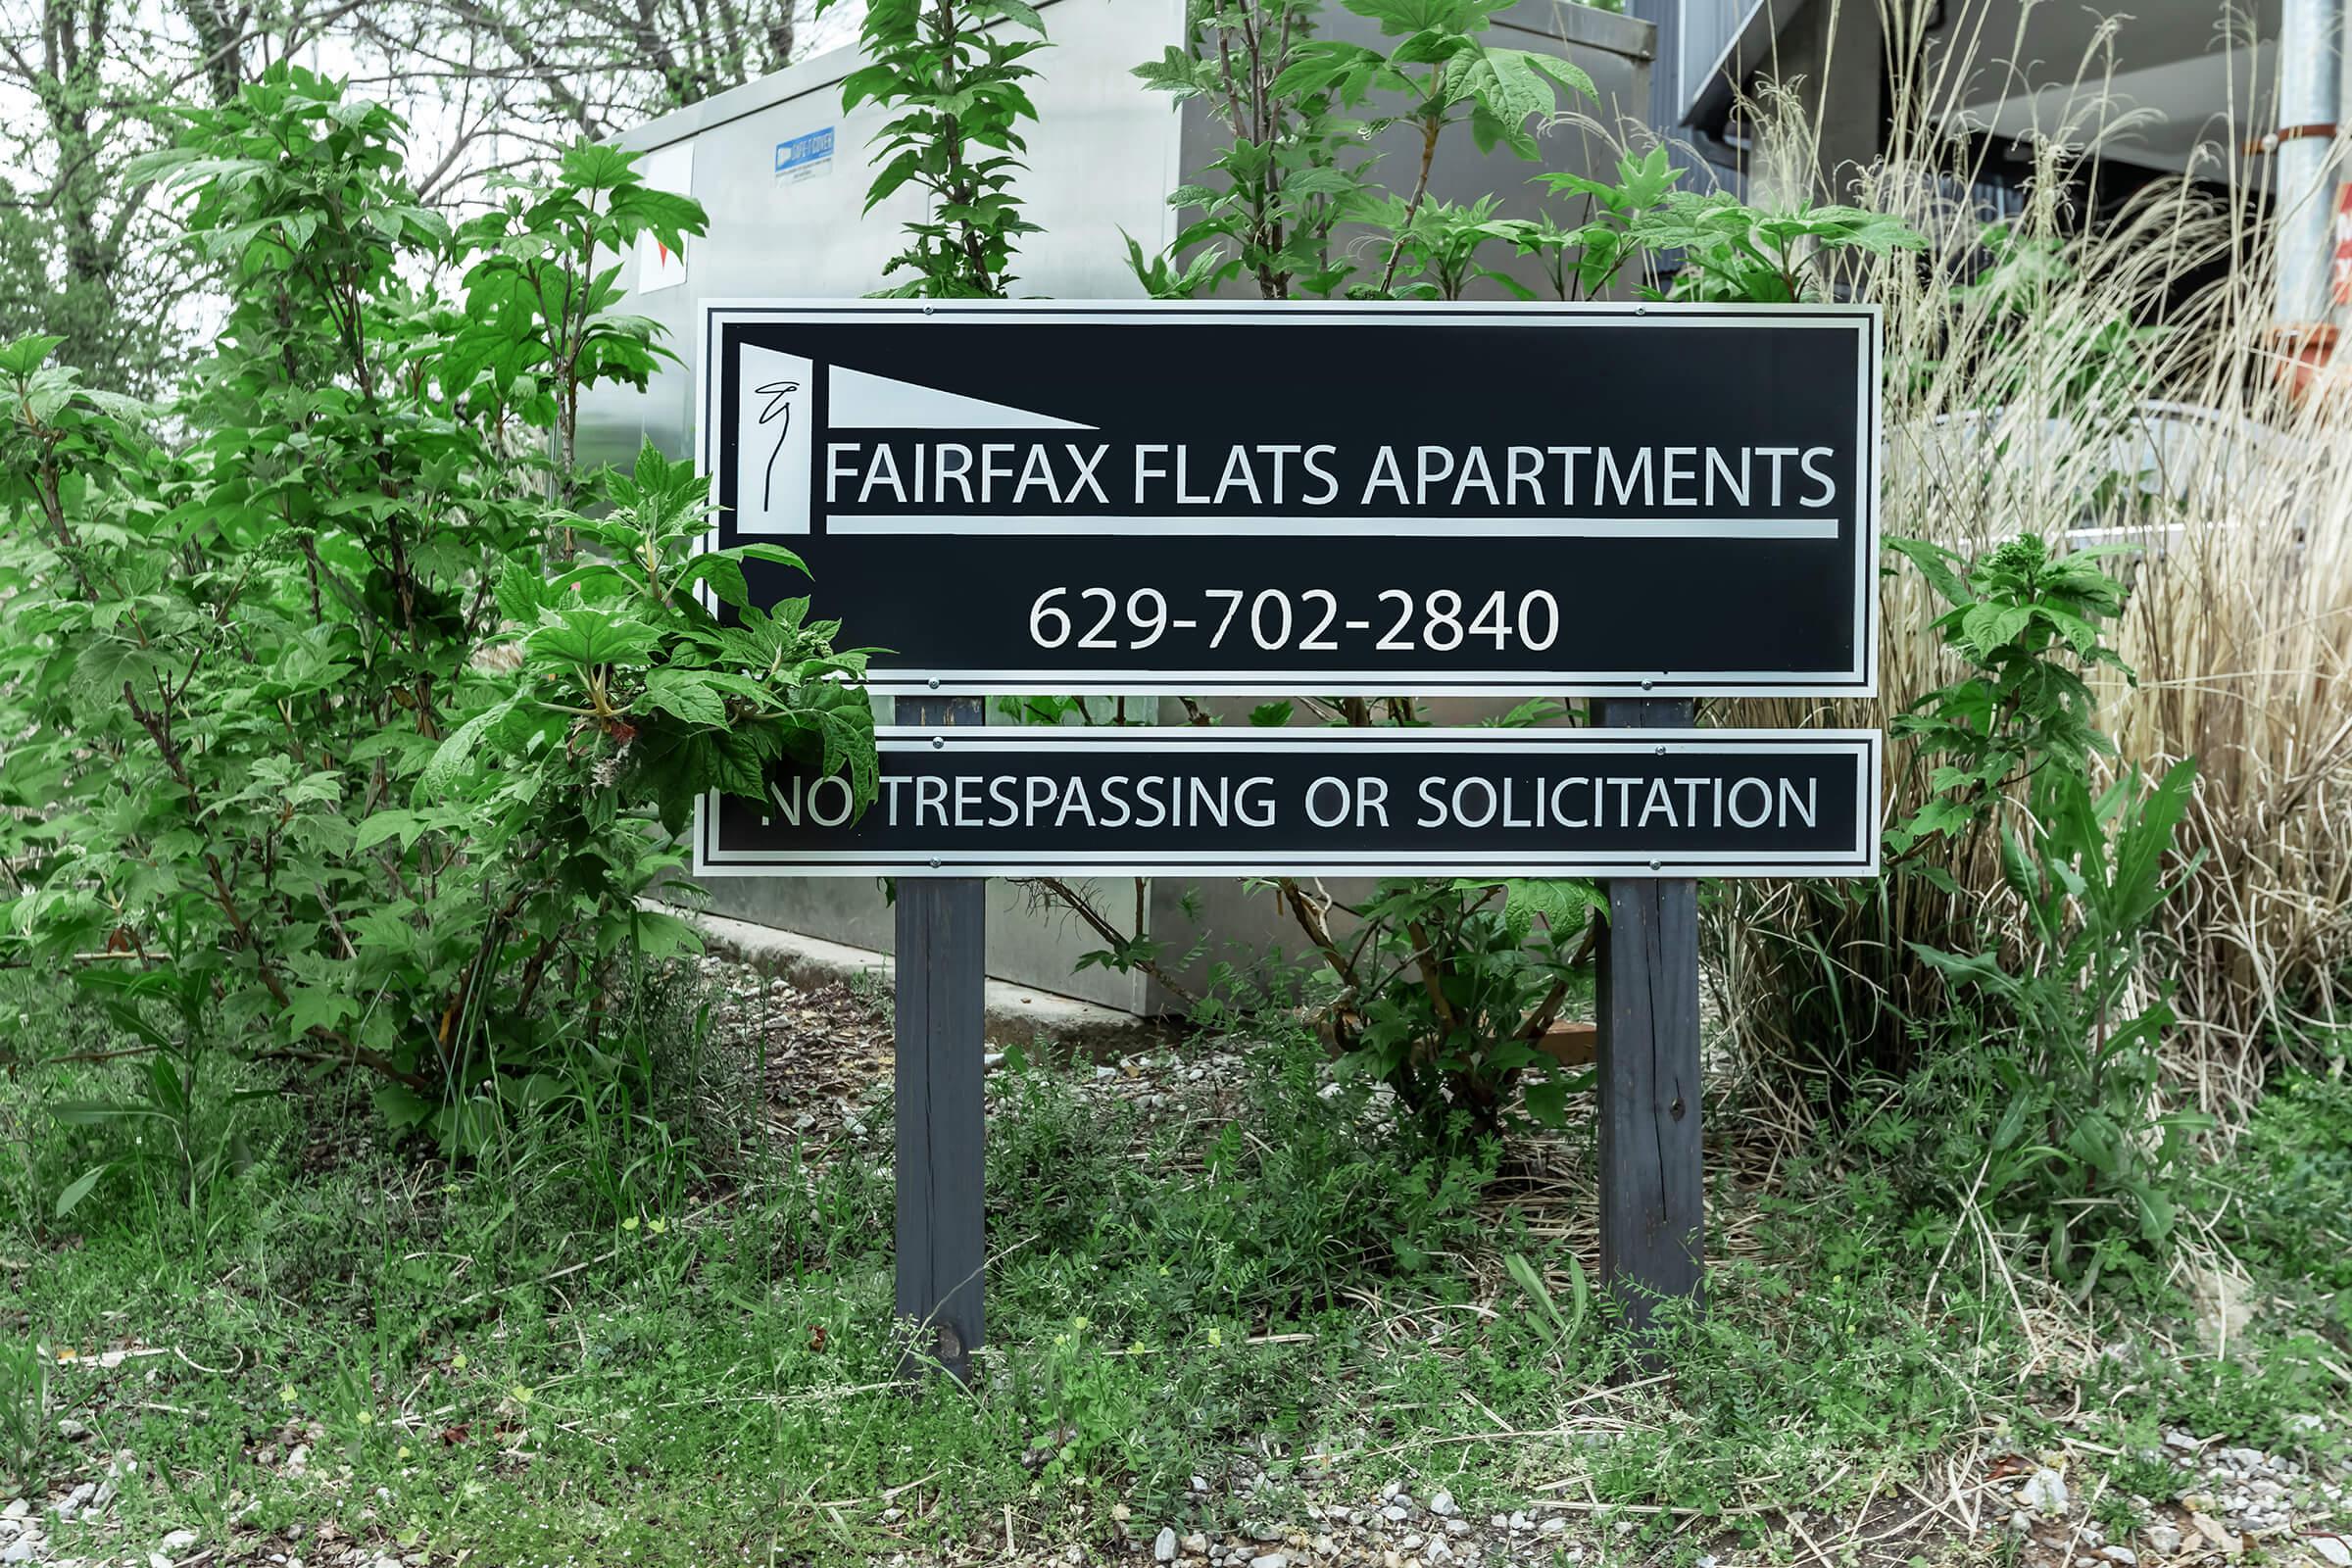 Contact Fairfax Flats in Nashville, TN